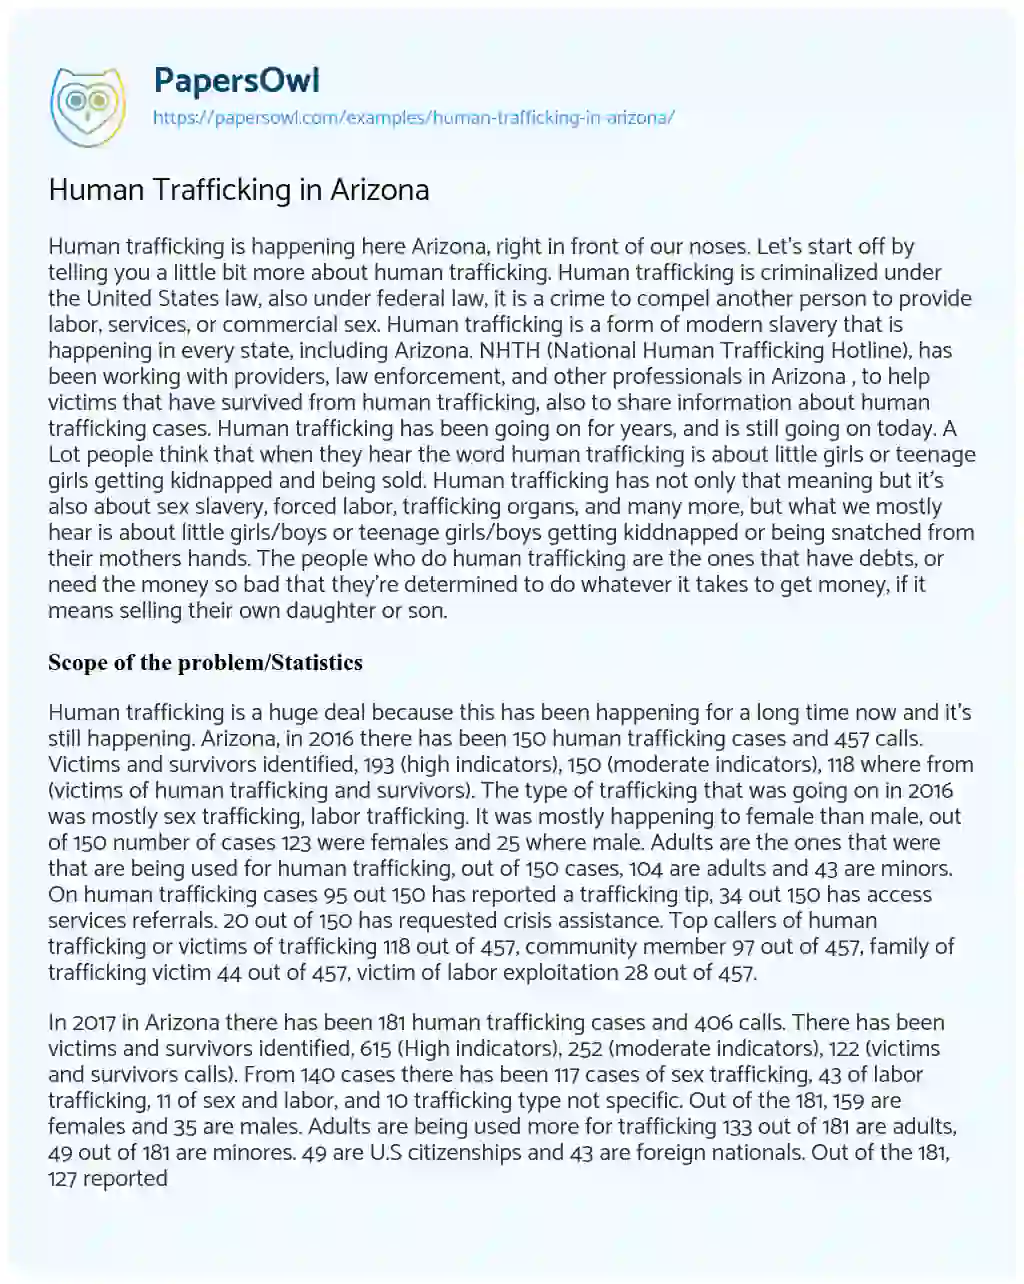 Essay on Human Trafficking in Arizona